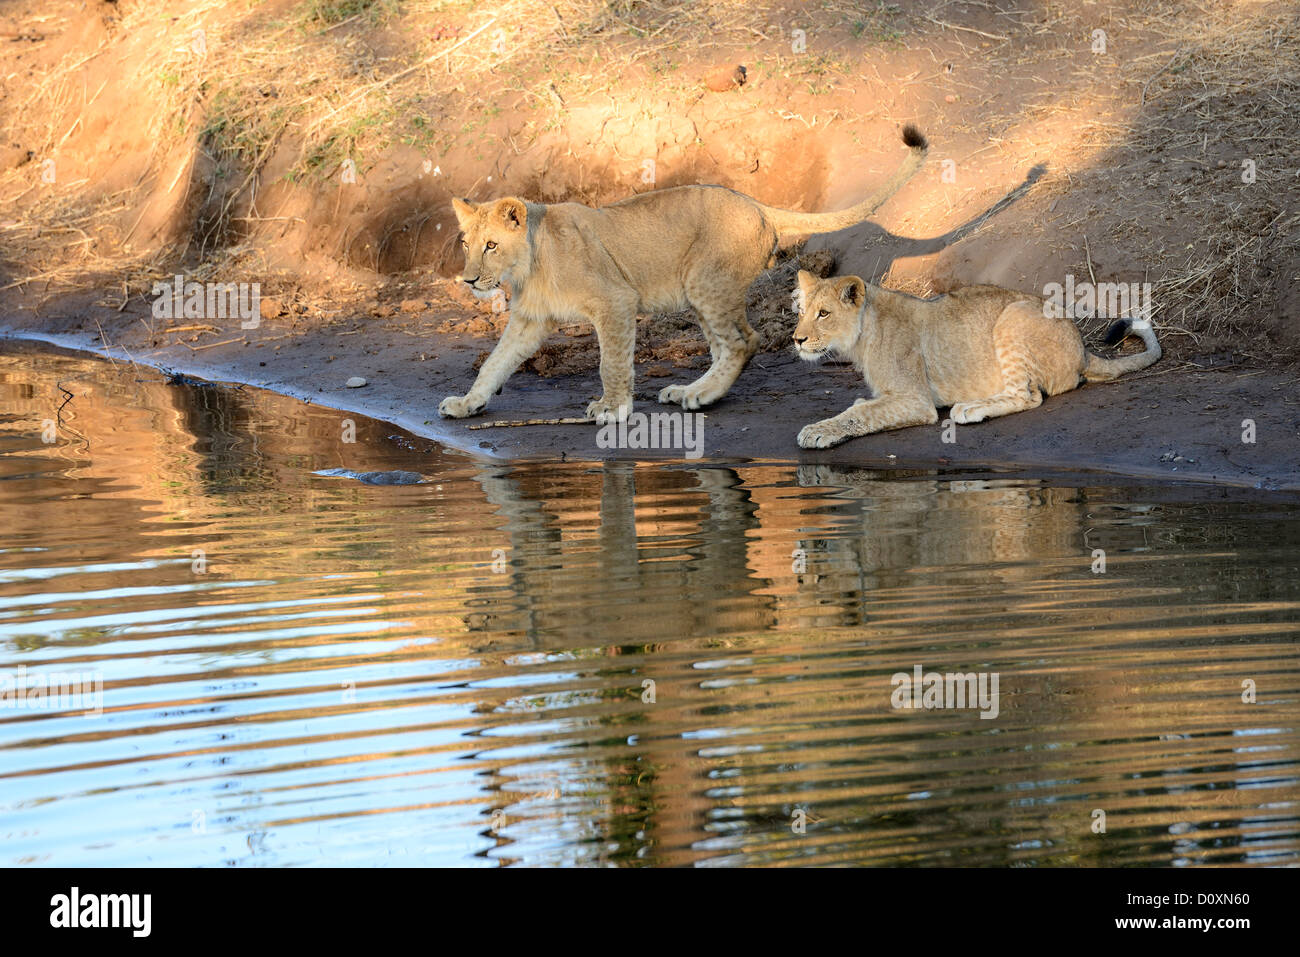 Africa, Zimbabwe, lion, animal, leo, wildlife, safari, water, reflection Stock Photo